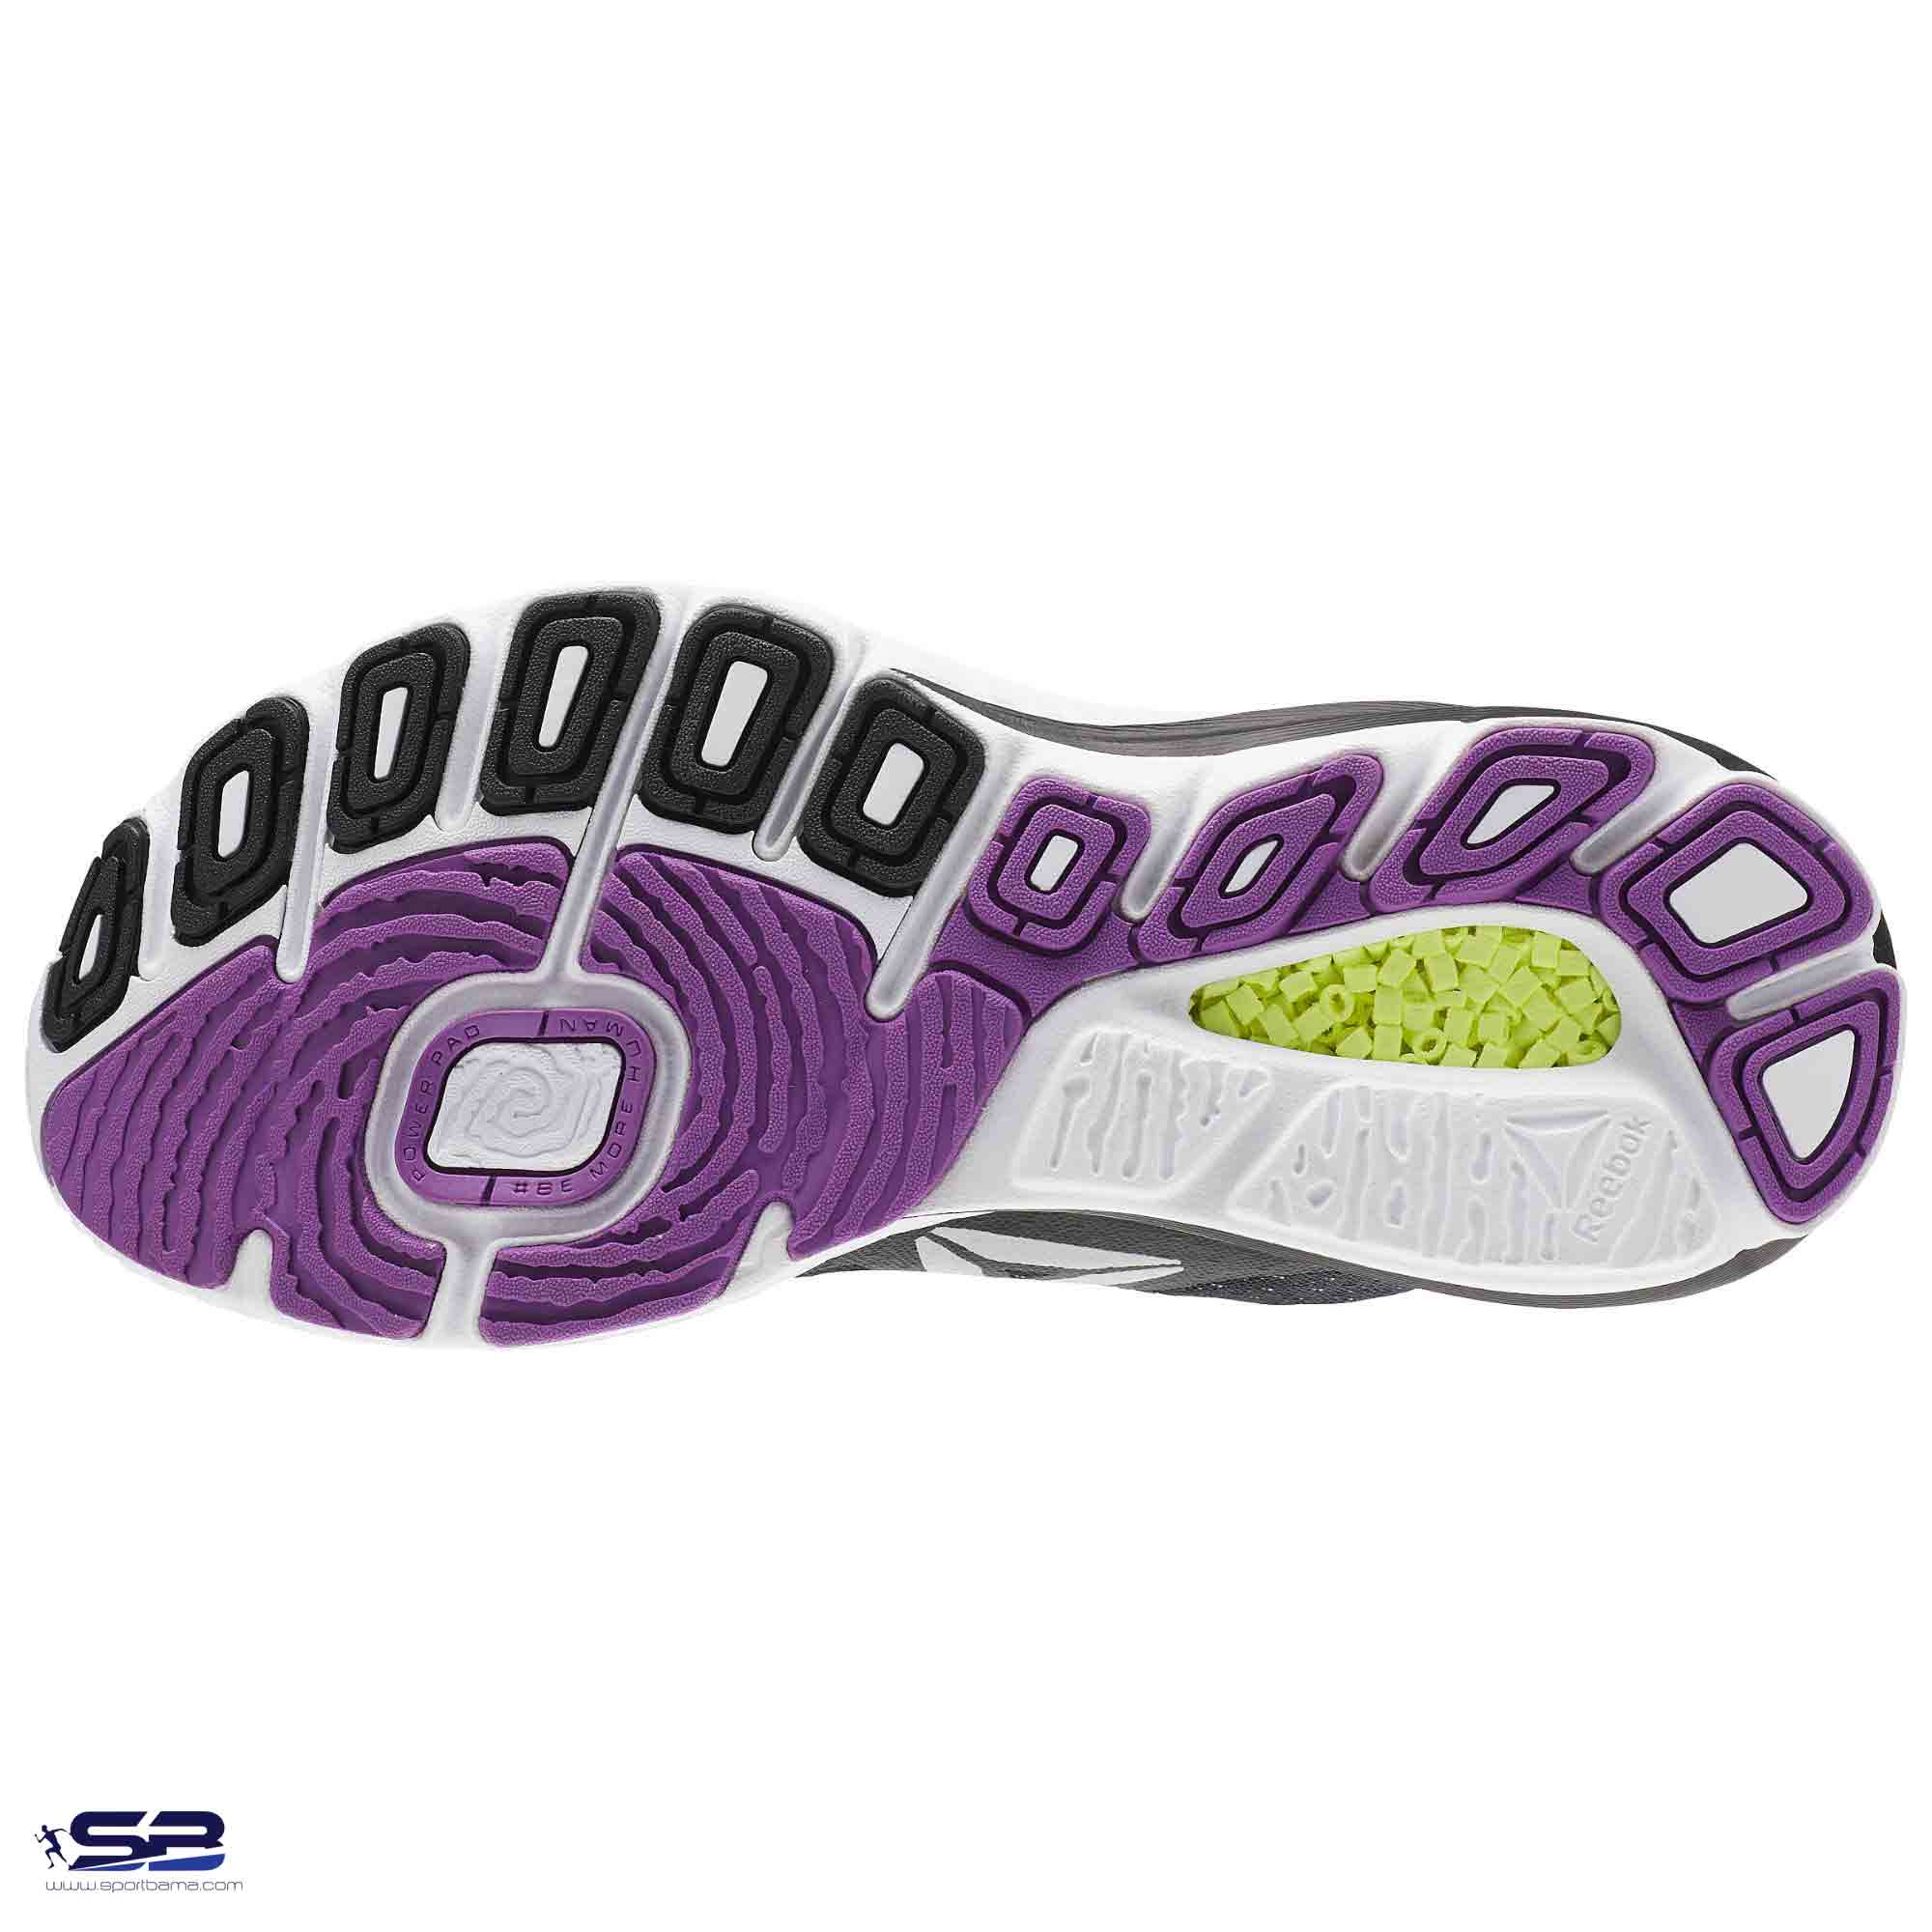  خرید  کفش کتانی اورجینال ریباک     Reebok Running Shoes BS8531  